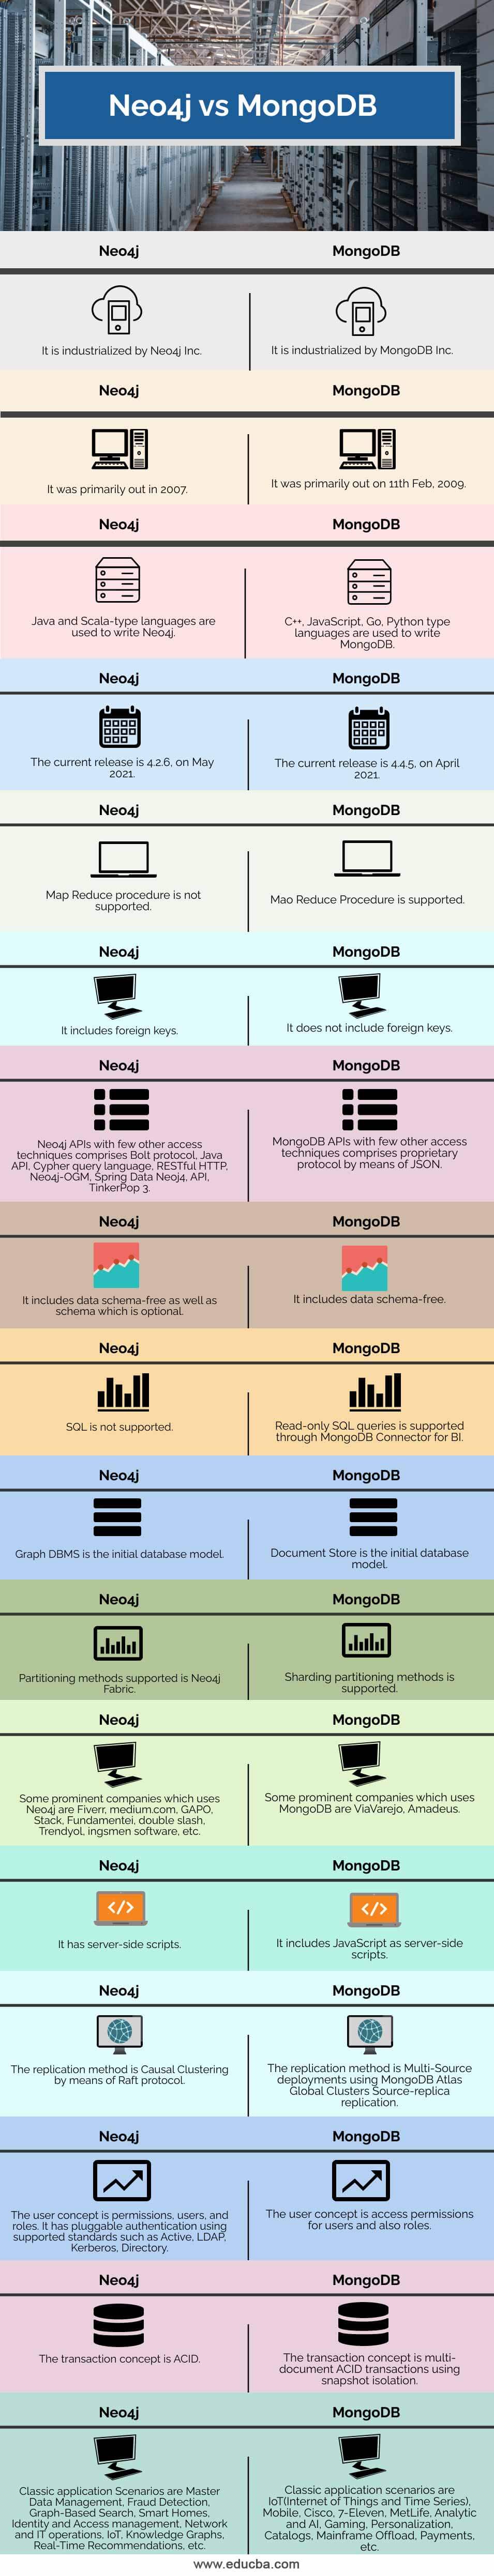 Neo4j-vs-MongoDB-info